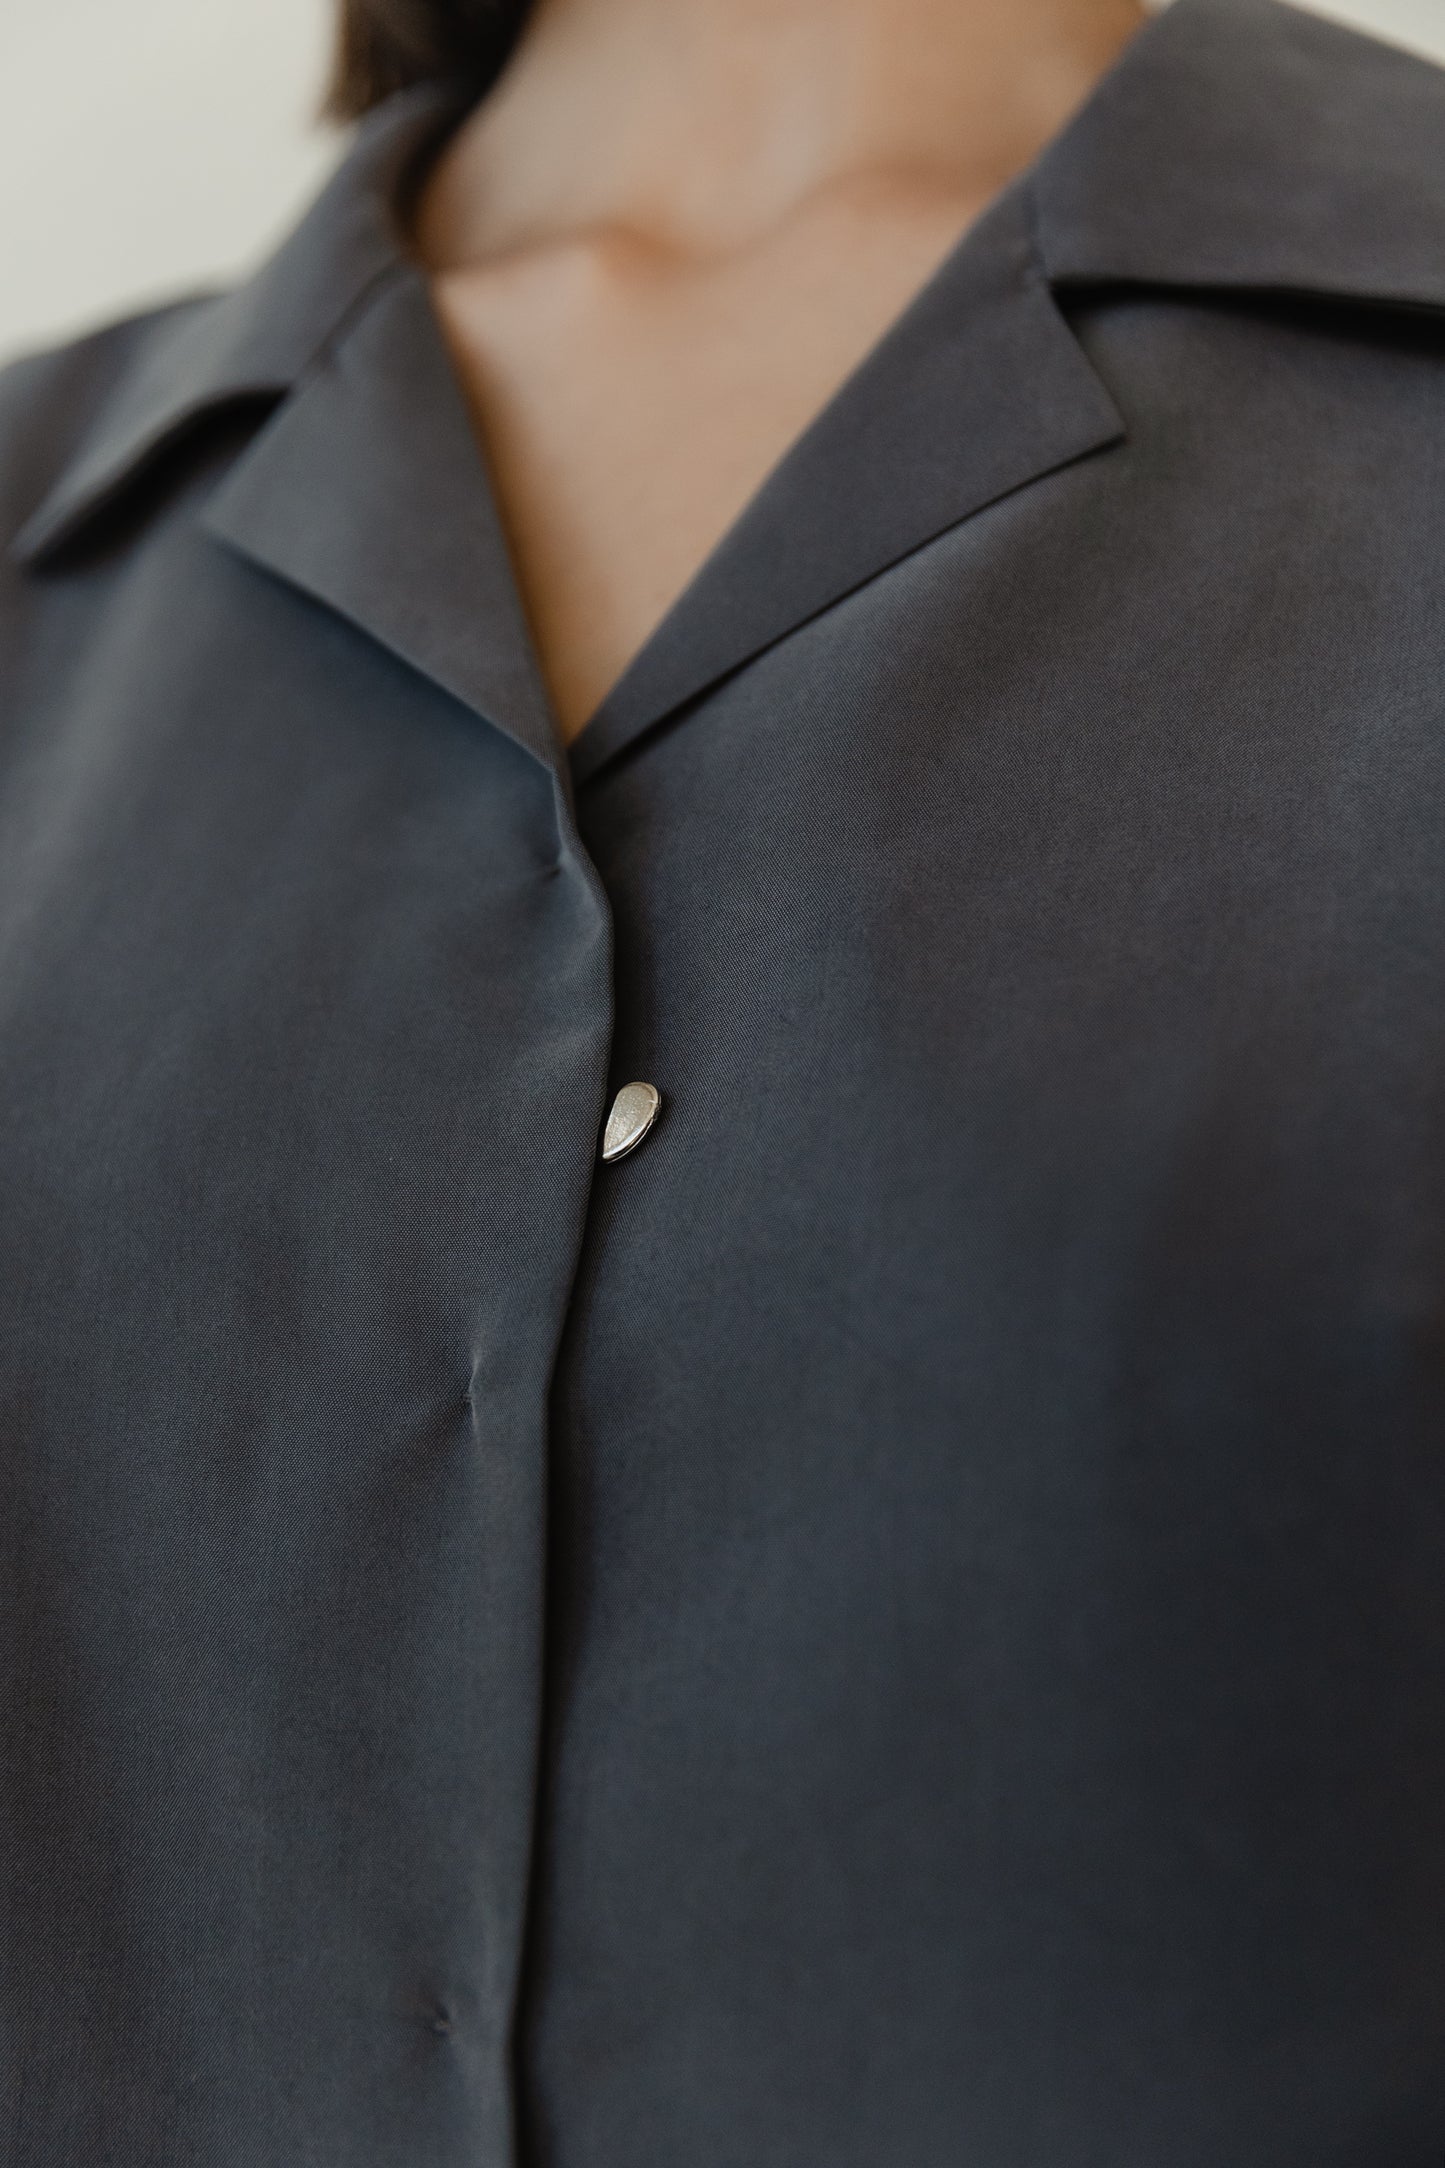 Women's long-sleeved gray shirt